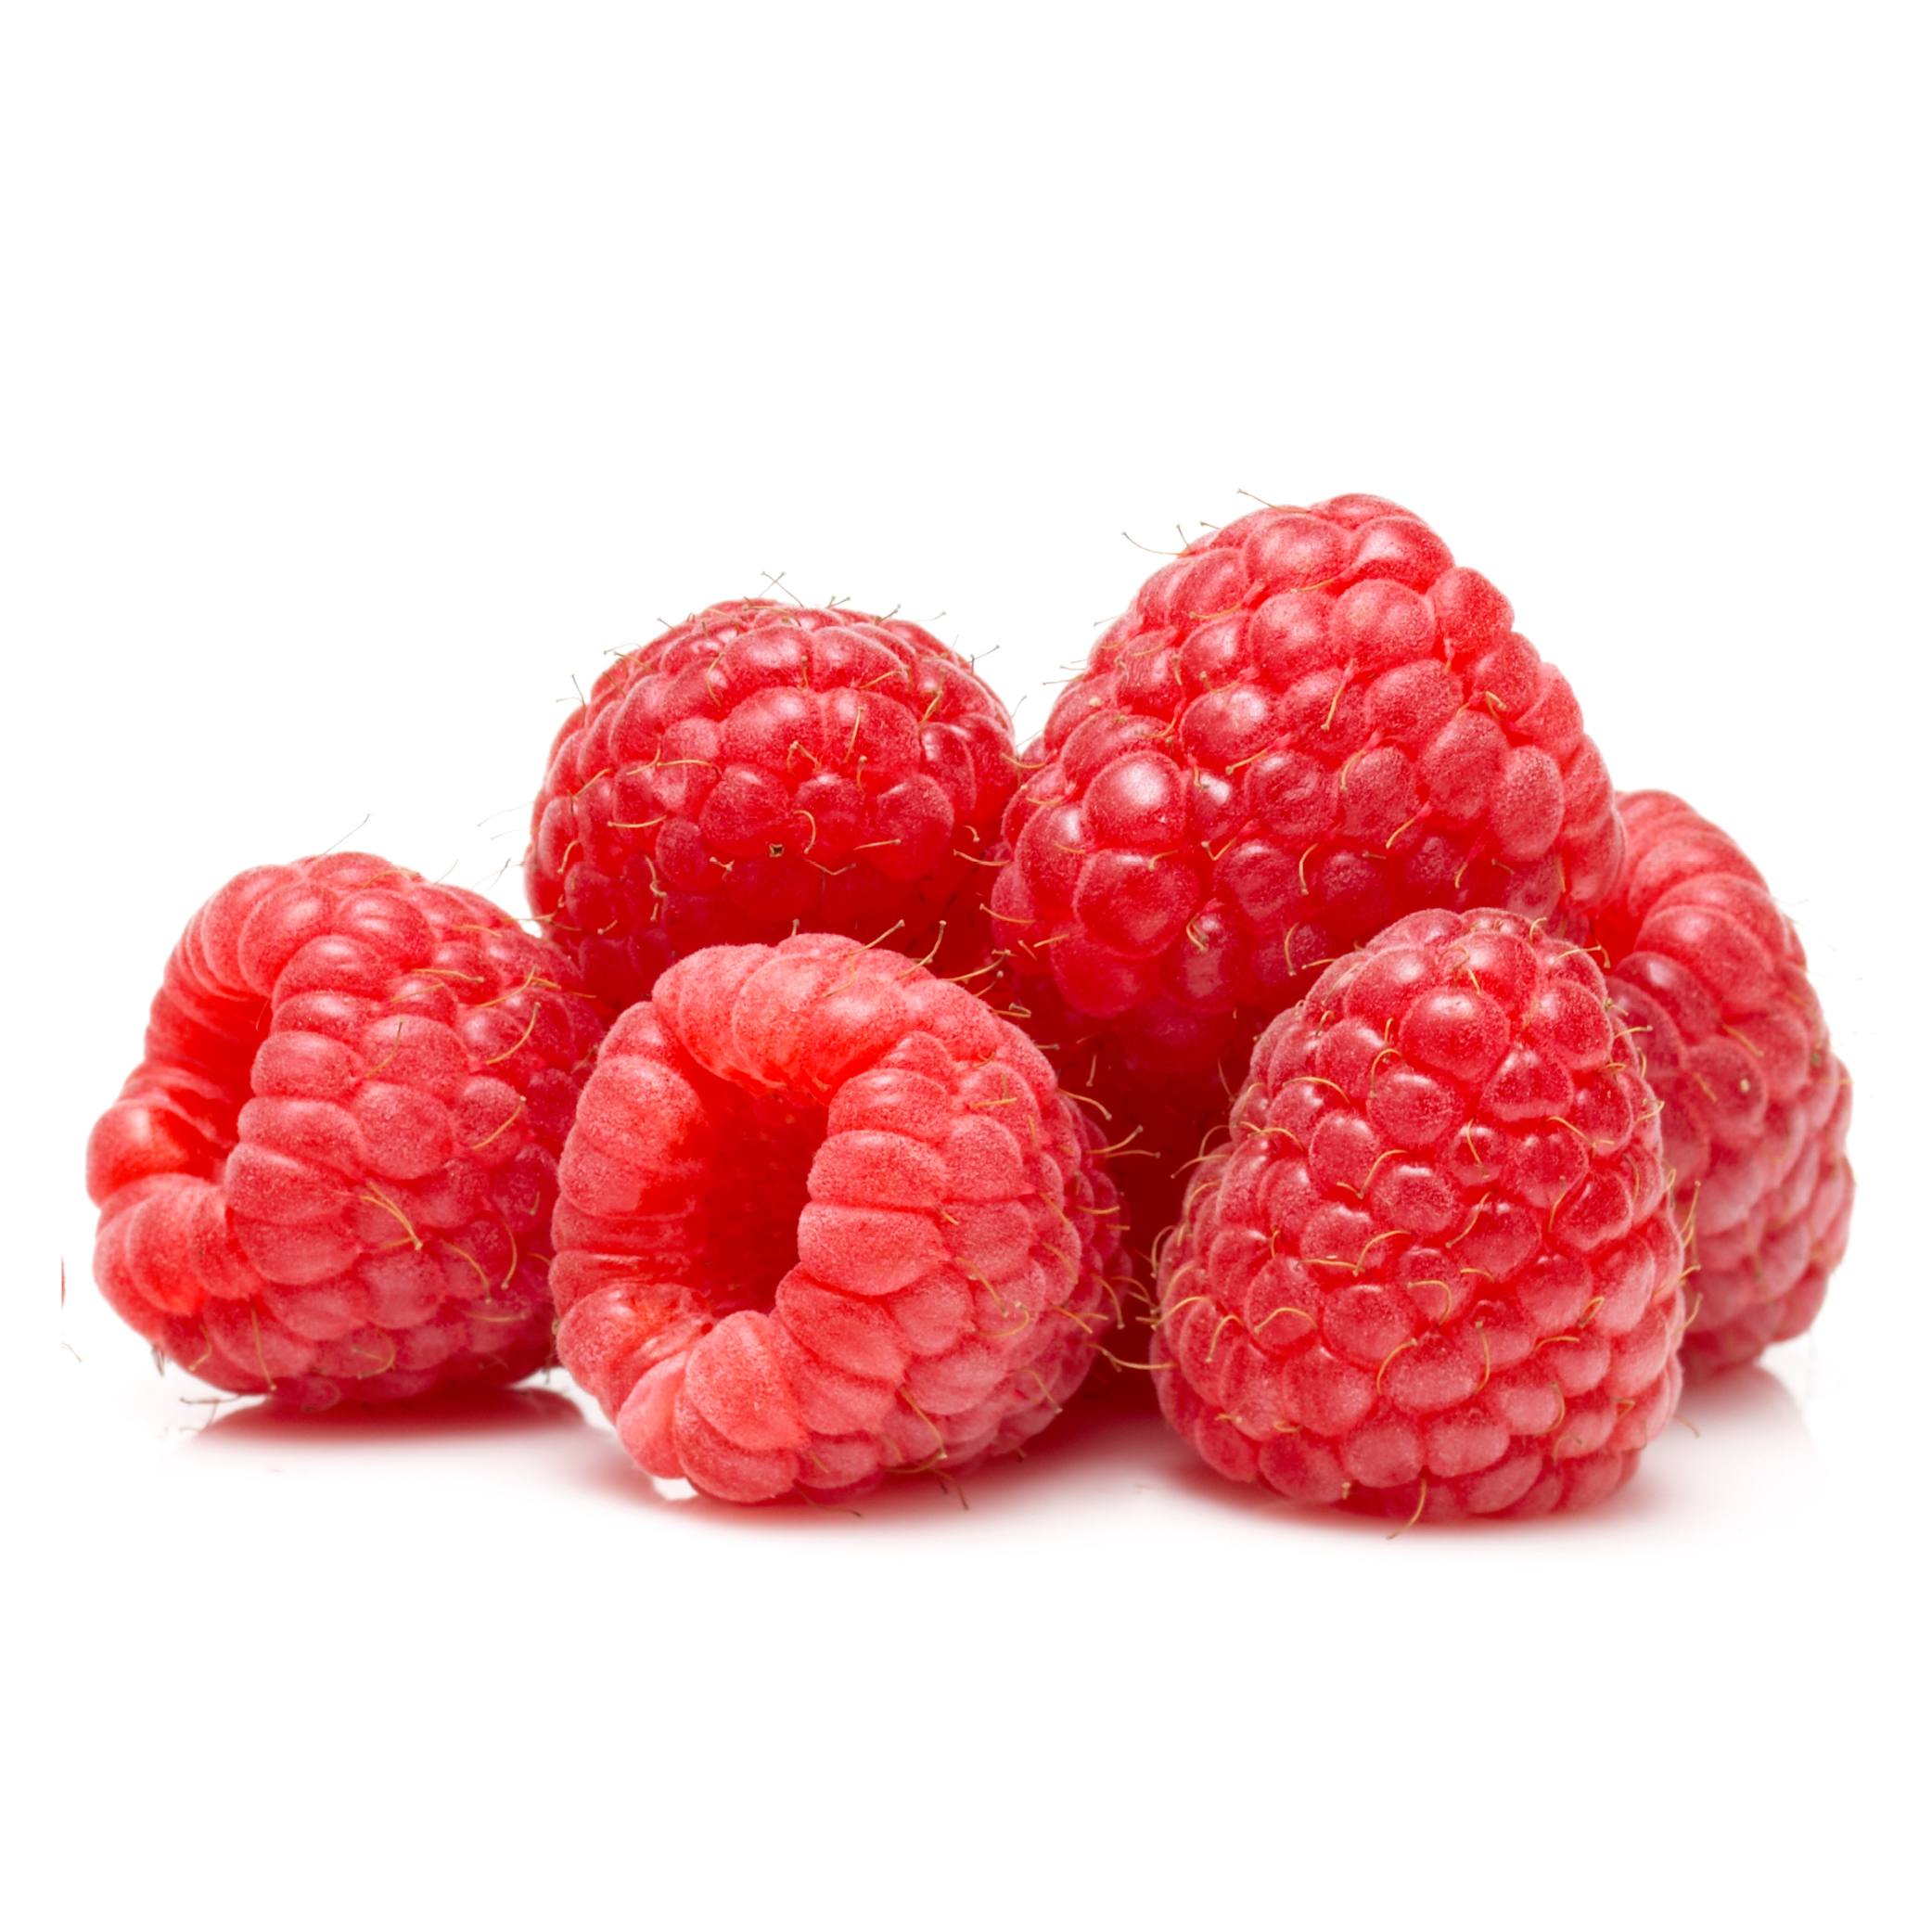 SonderJansen - IQF Frozen Whole Raspberries (Pollana Variety) - 101013 ...